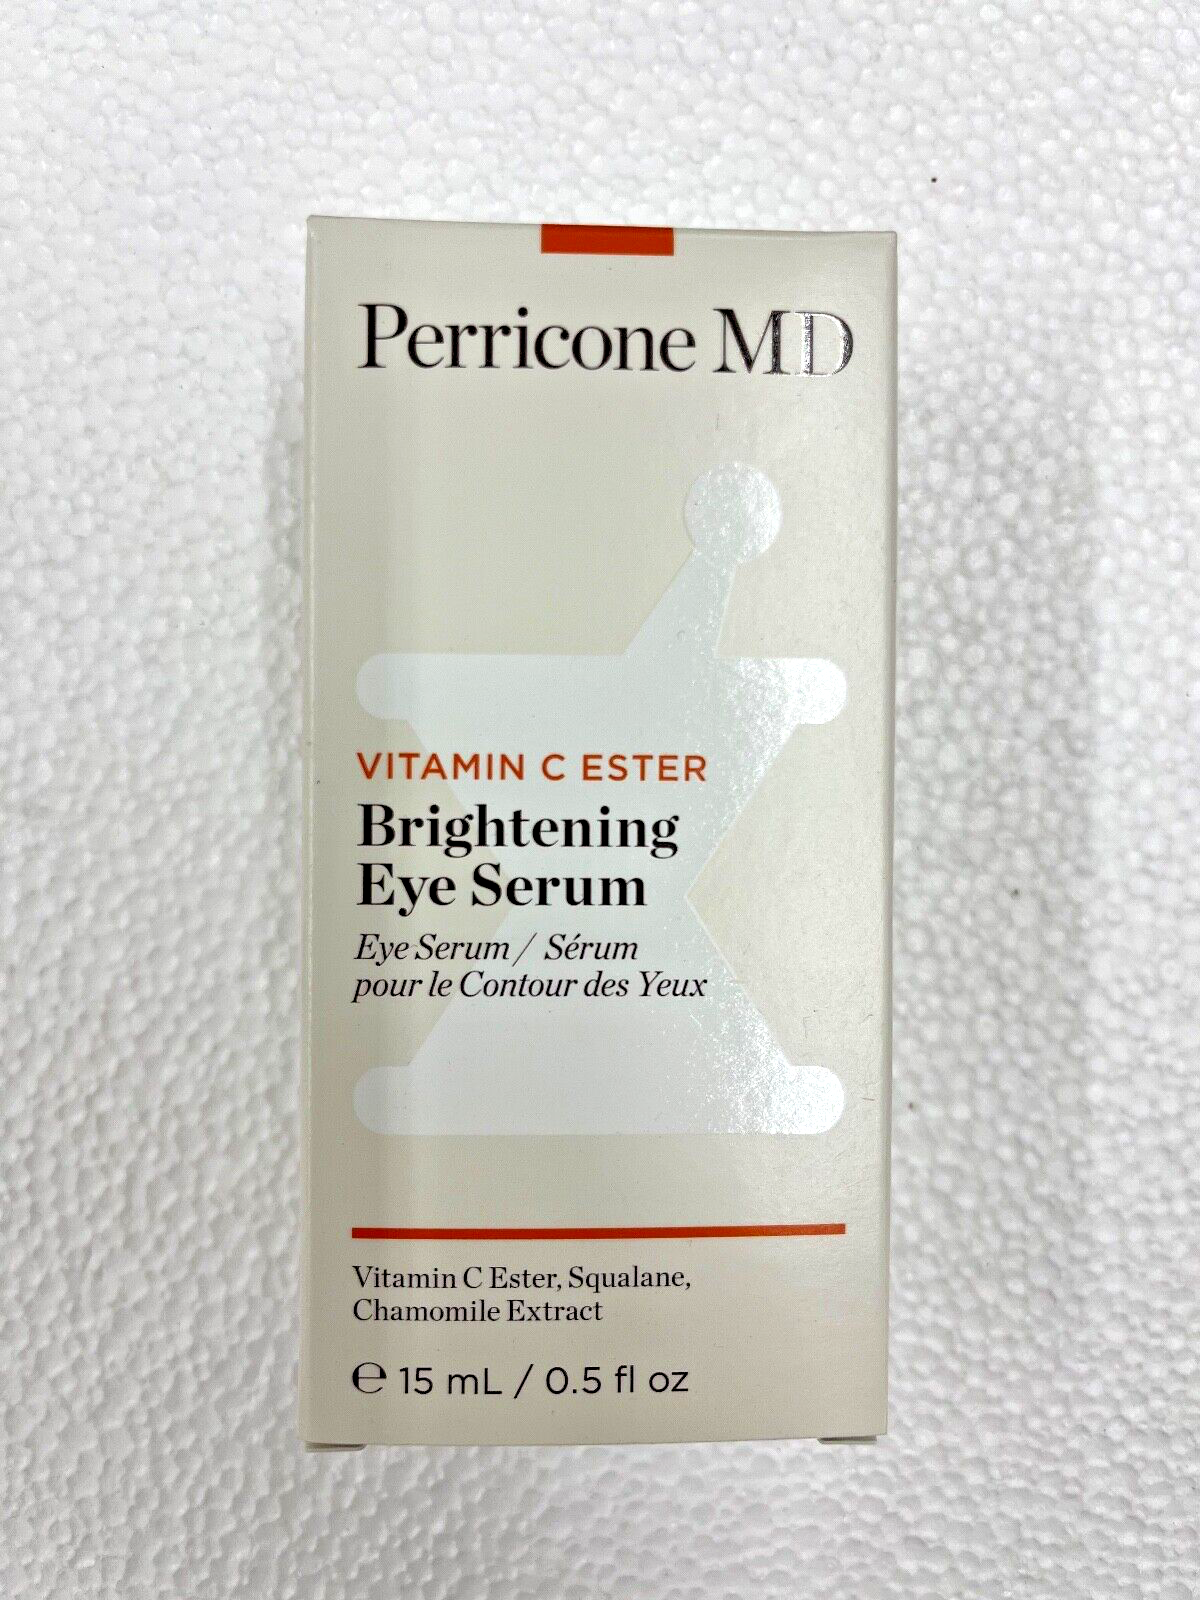 Perricone M.D. Vitamin C ester eye serum FREE SHIPPING - $68.60